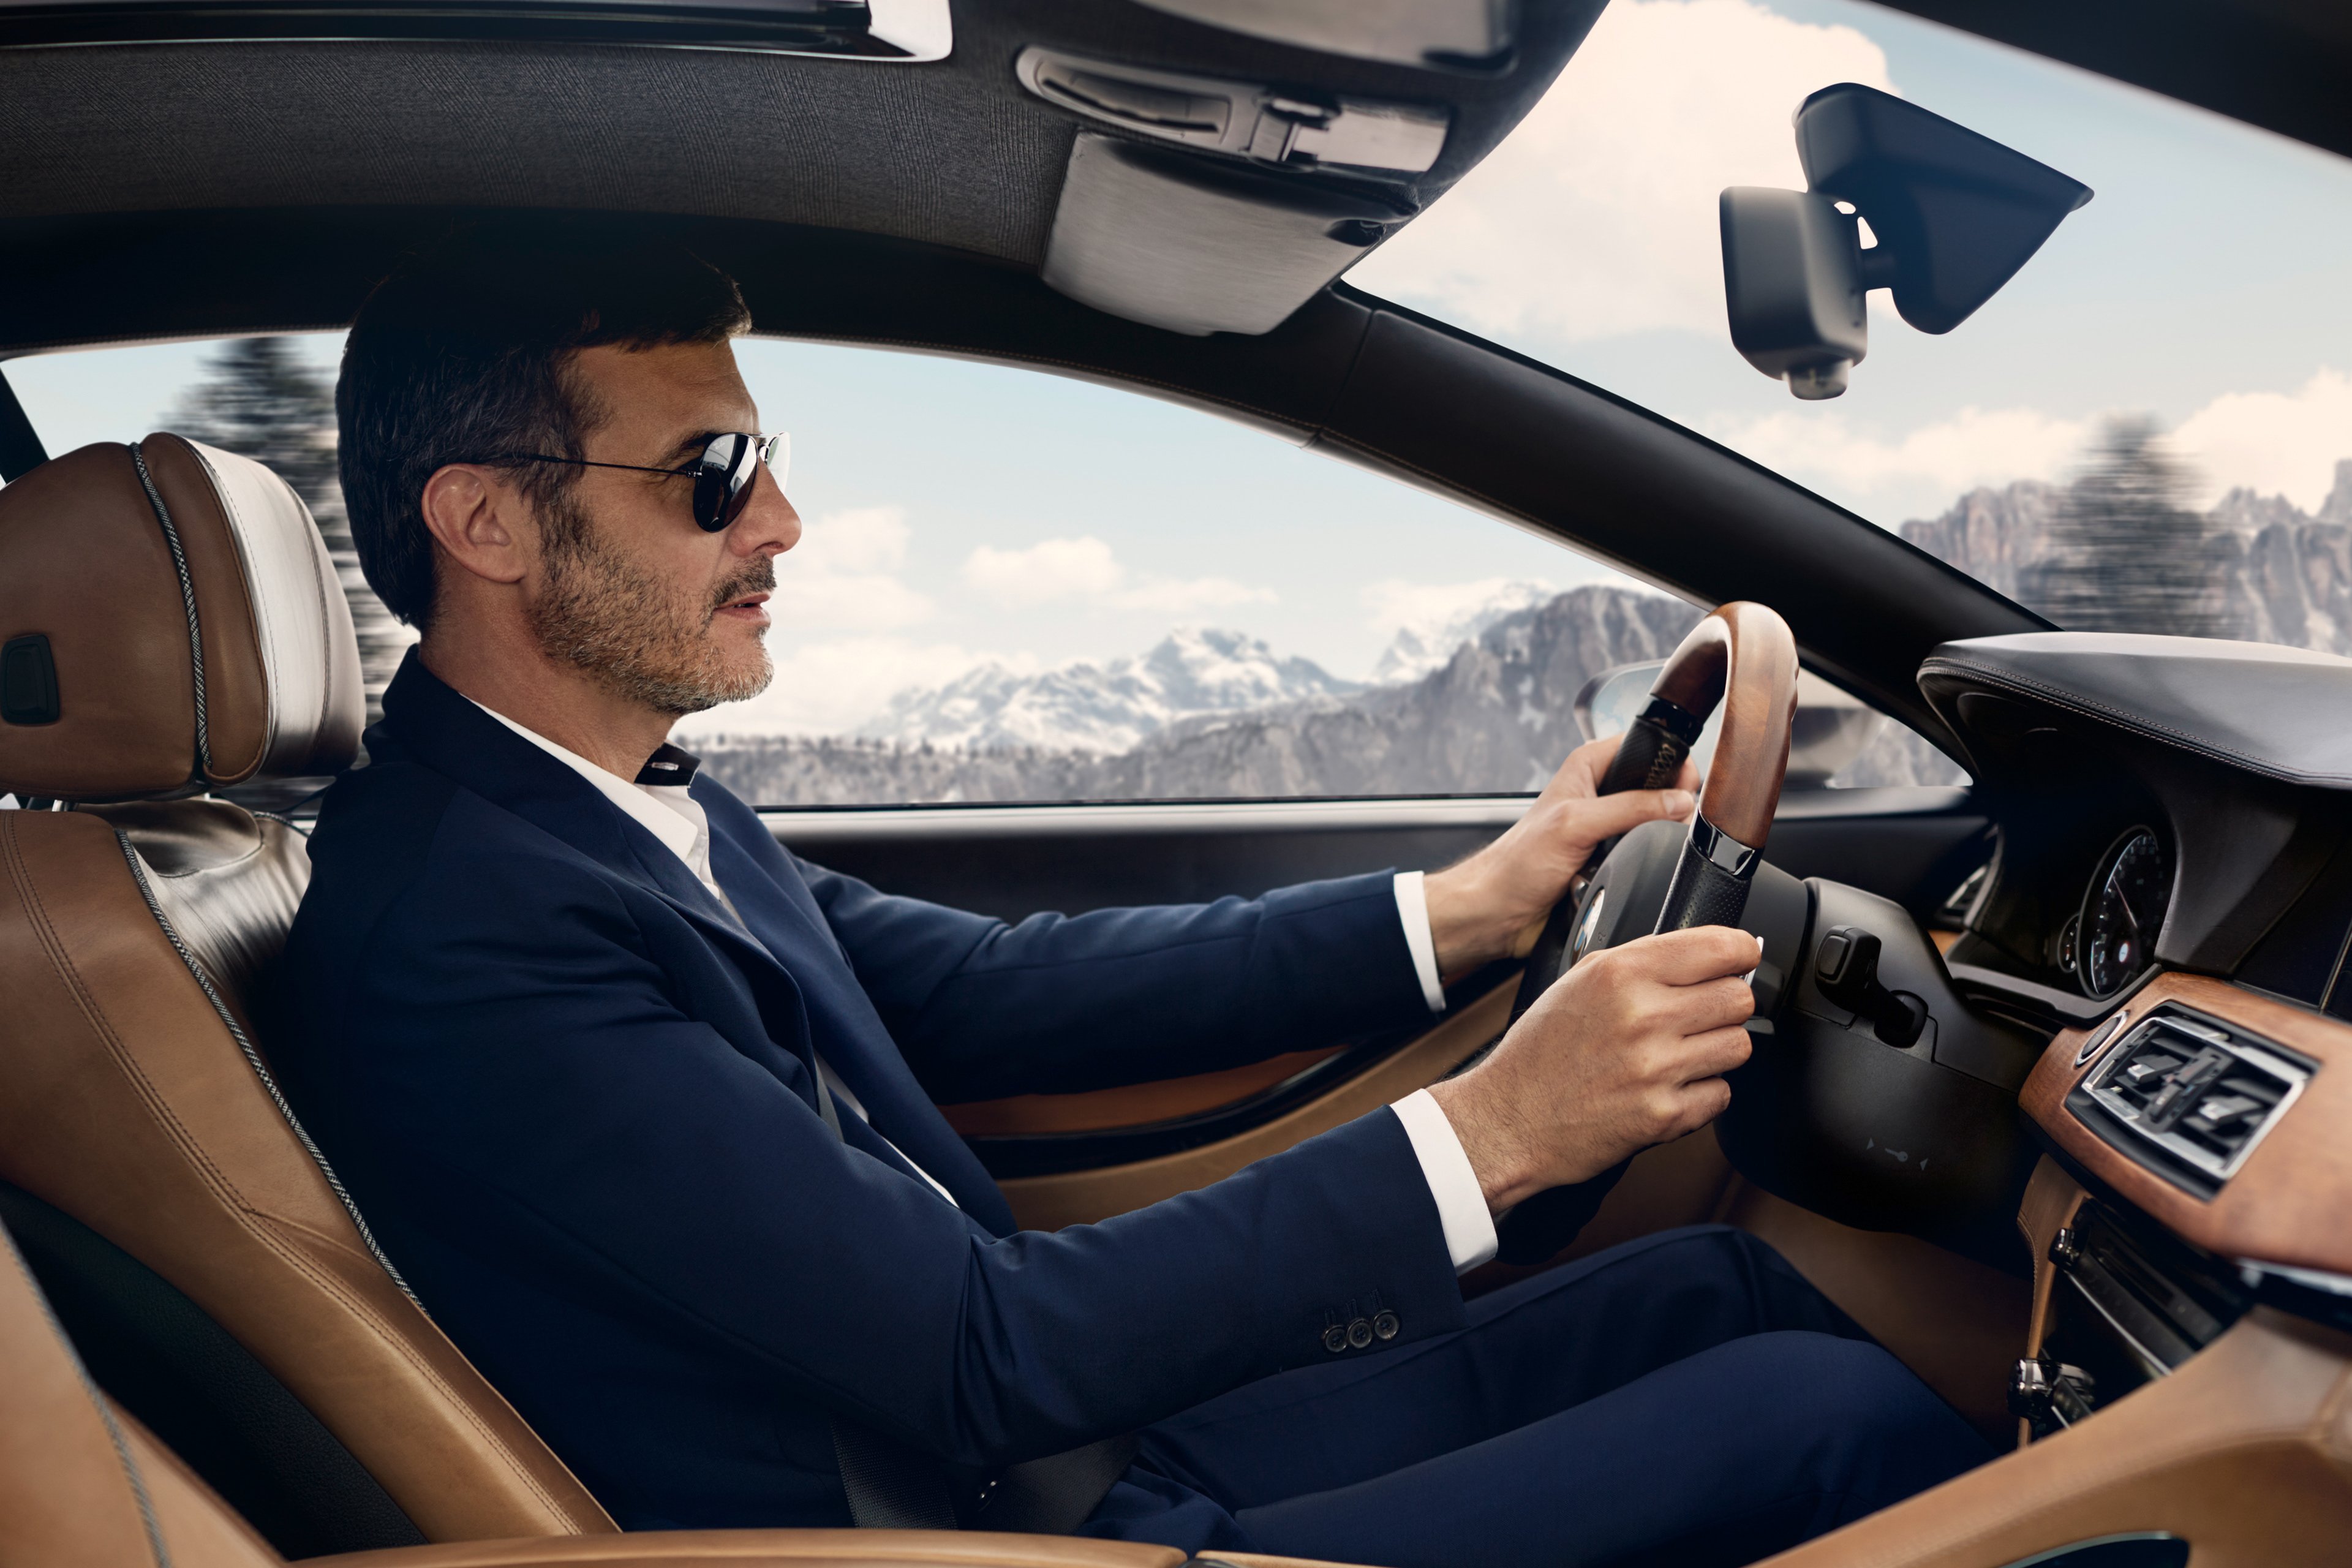 Paco drive a car. 2013 BMW Gran lusso Coupe (Pininfarina). Успешный мужчина. Красивый богатый мужчина. Состоятельный мужчина.